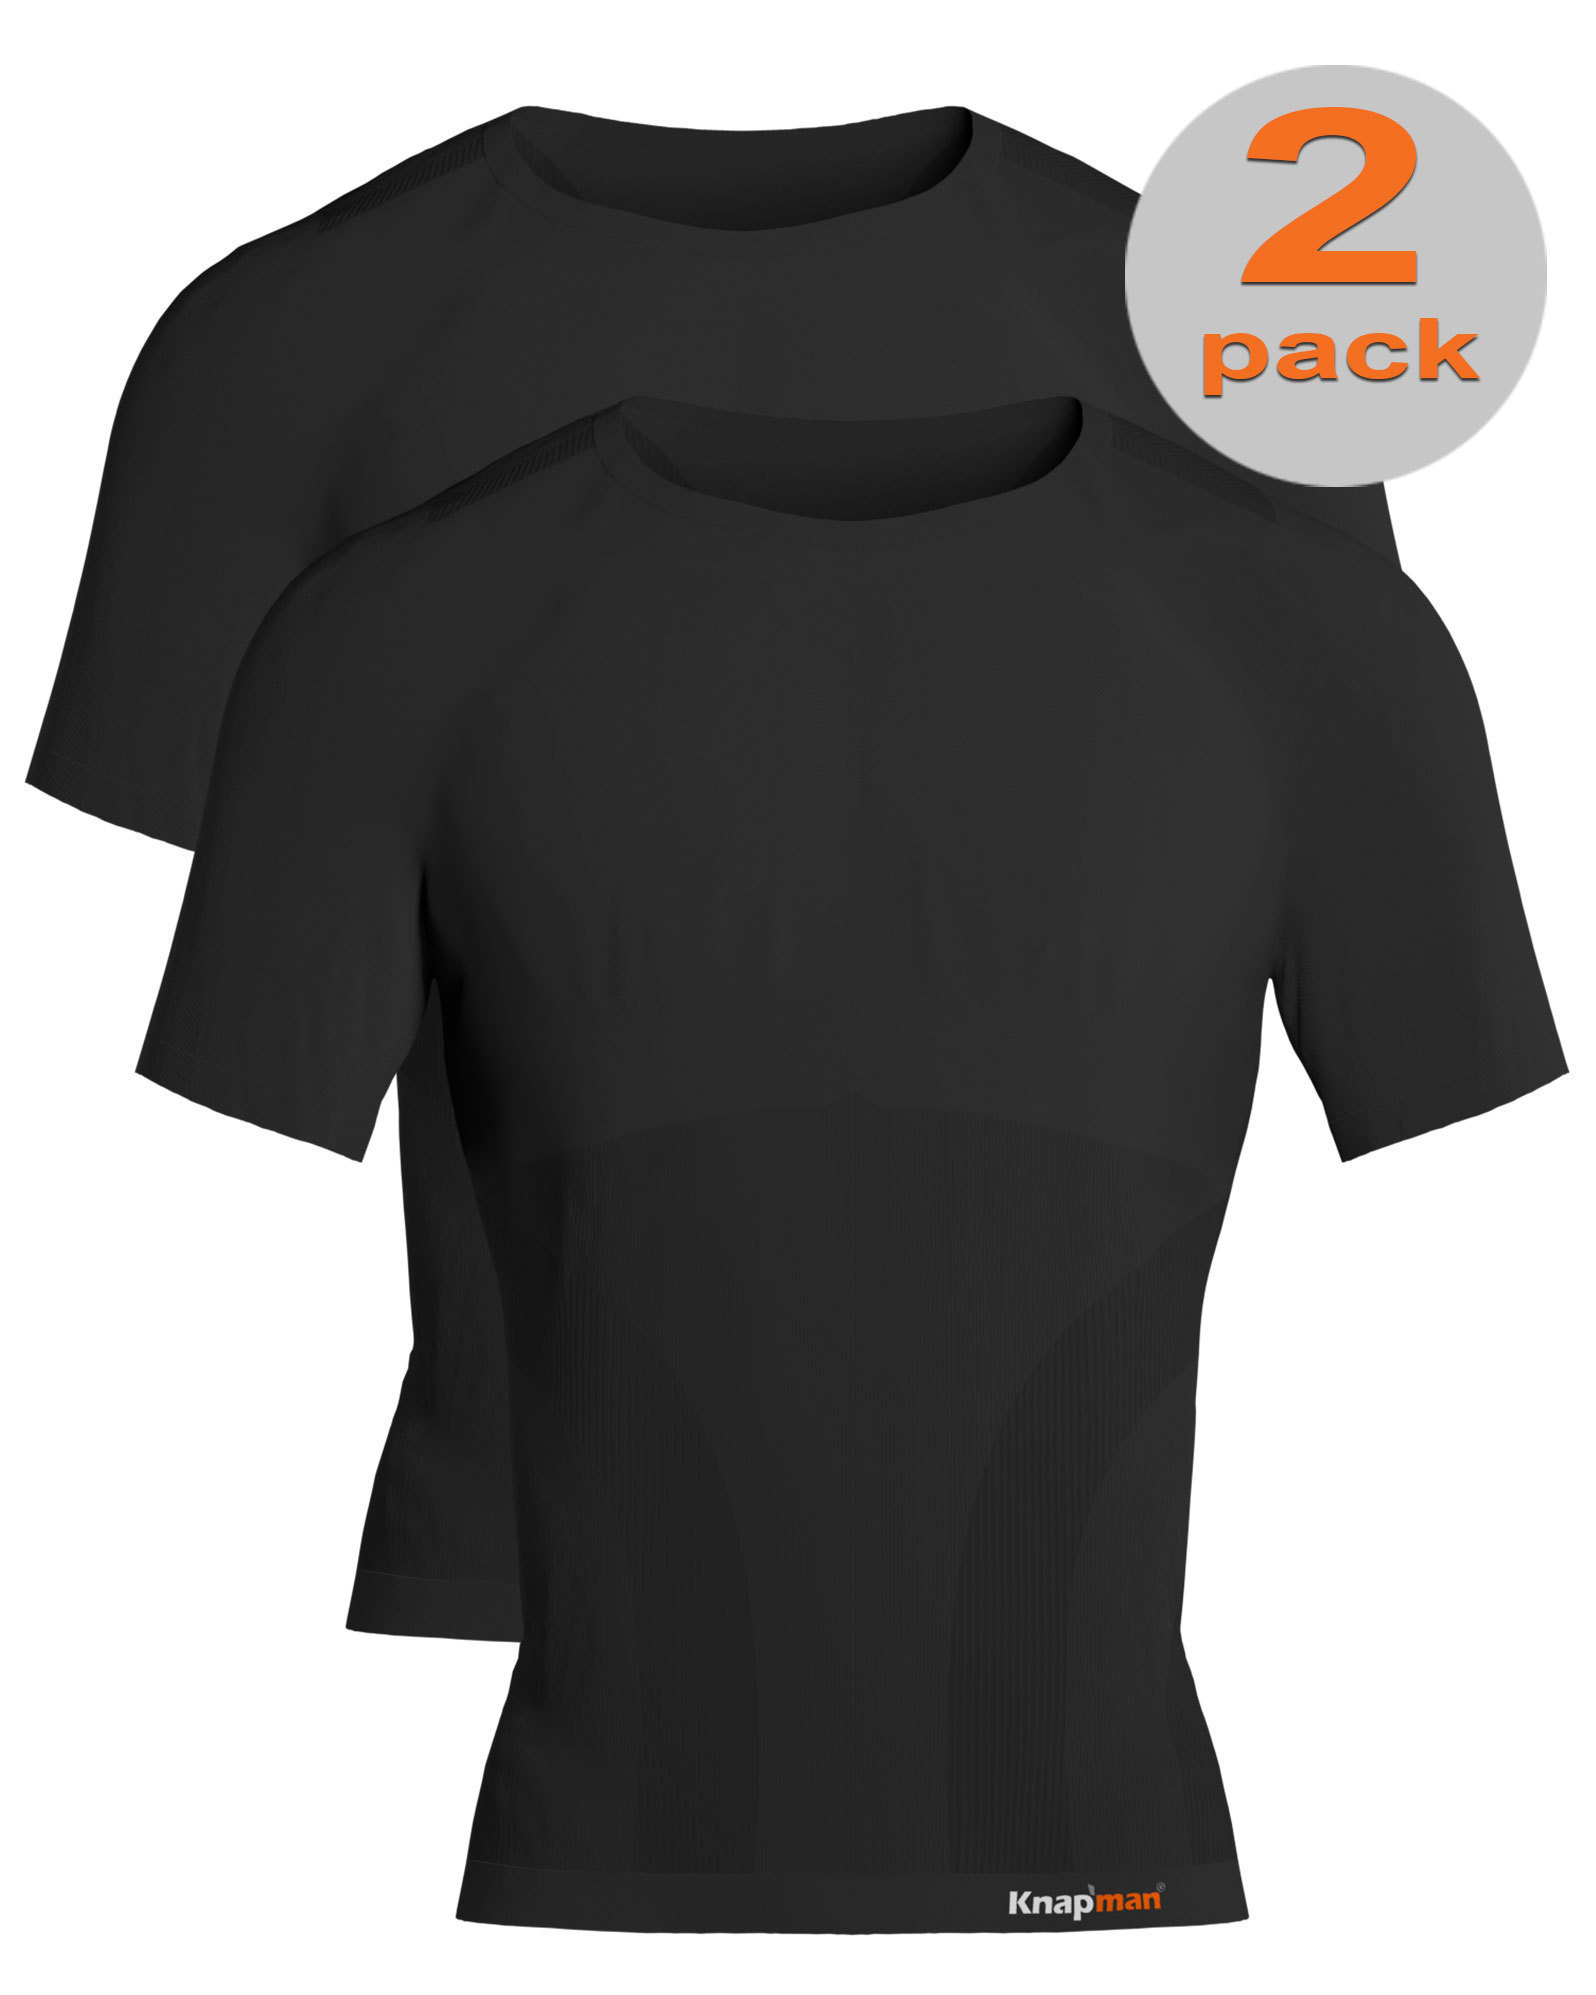 TWOPACK | Knapman Pro Performance Baselayer Shirt Kurzarm schwarz